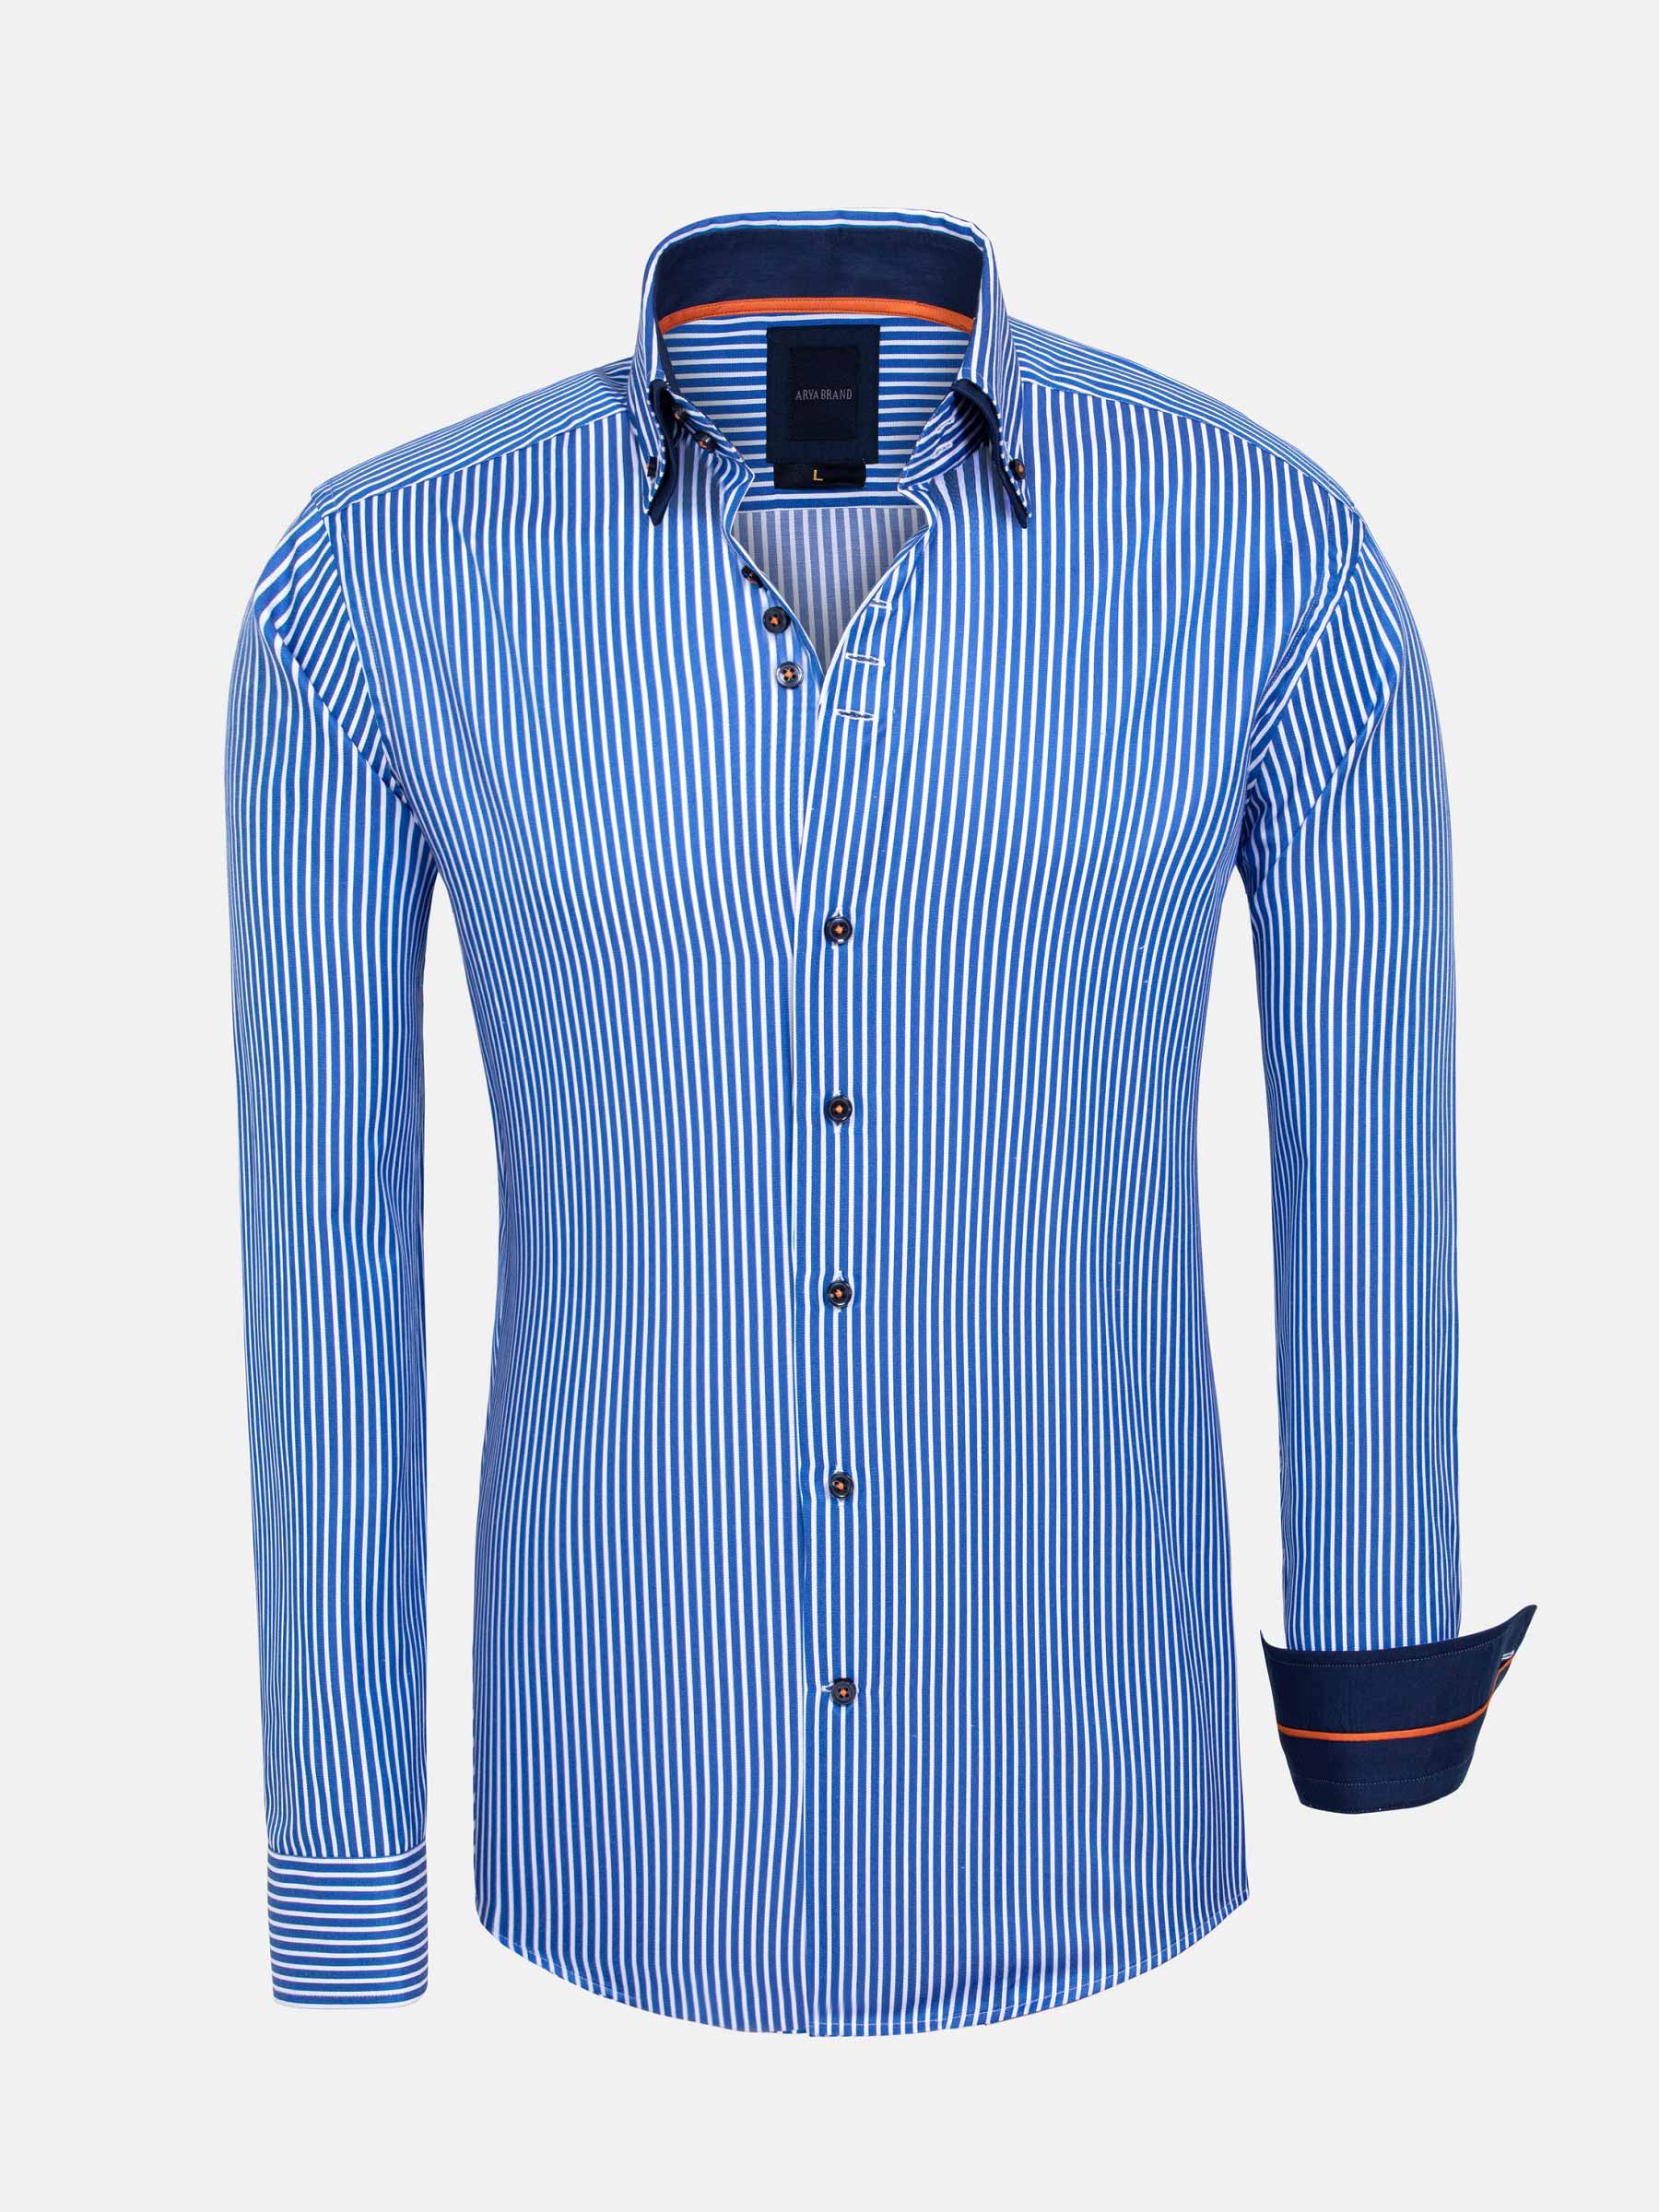 Cotton Shirts for Men | Buy Shirts Online India - Thestiffcollar –  Thestiffcollar.com